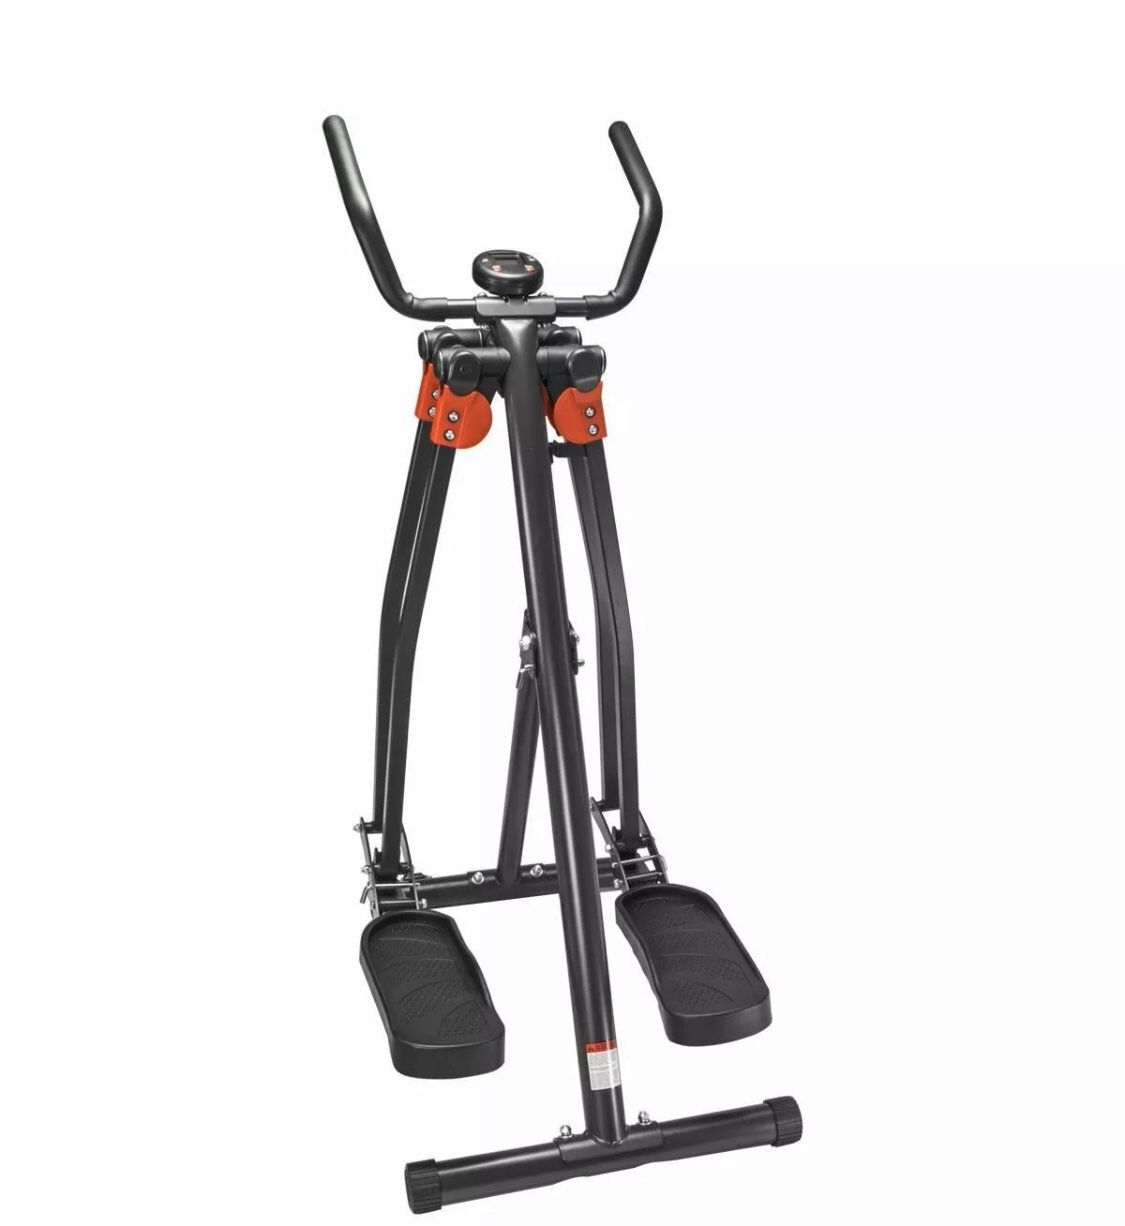 ⭐️⭐️ BRAND NEW Fitness Equipment Elliptical Trainer Cardio Machine Compact Air Walker w LCD